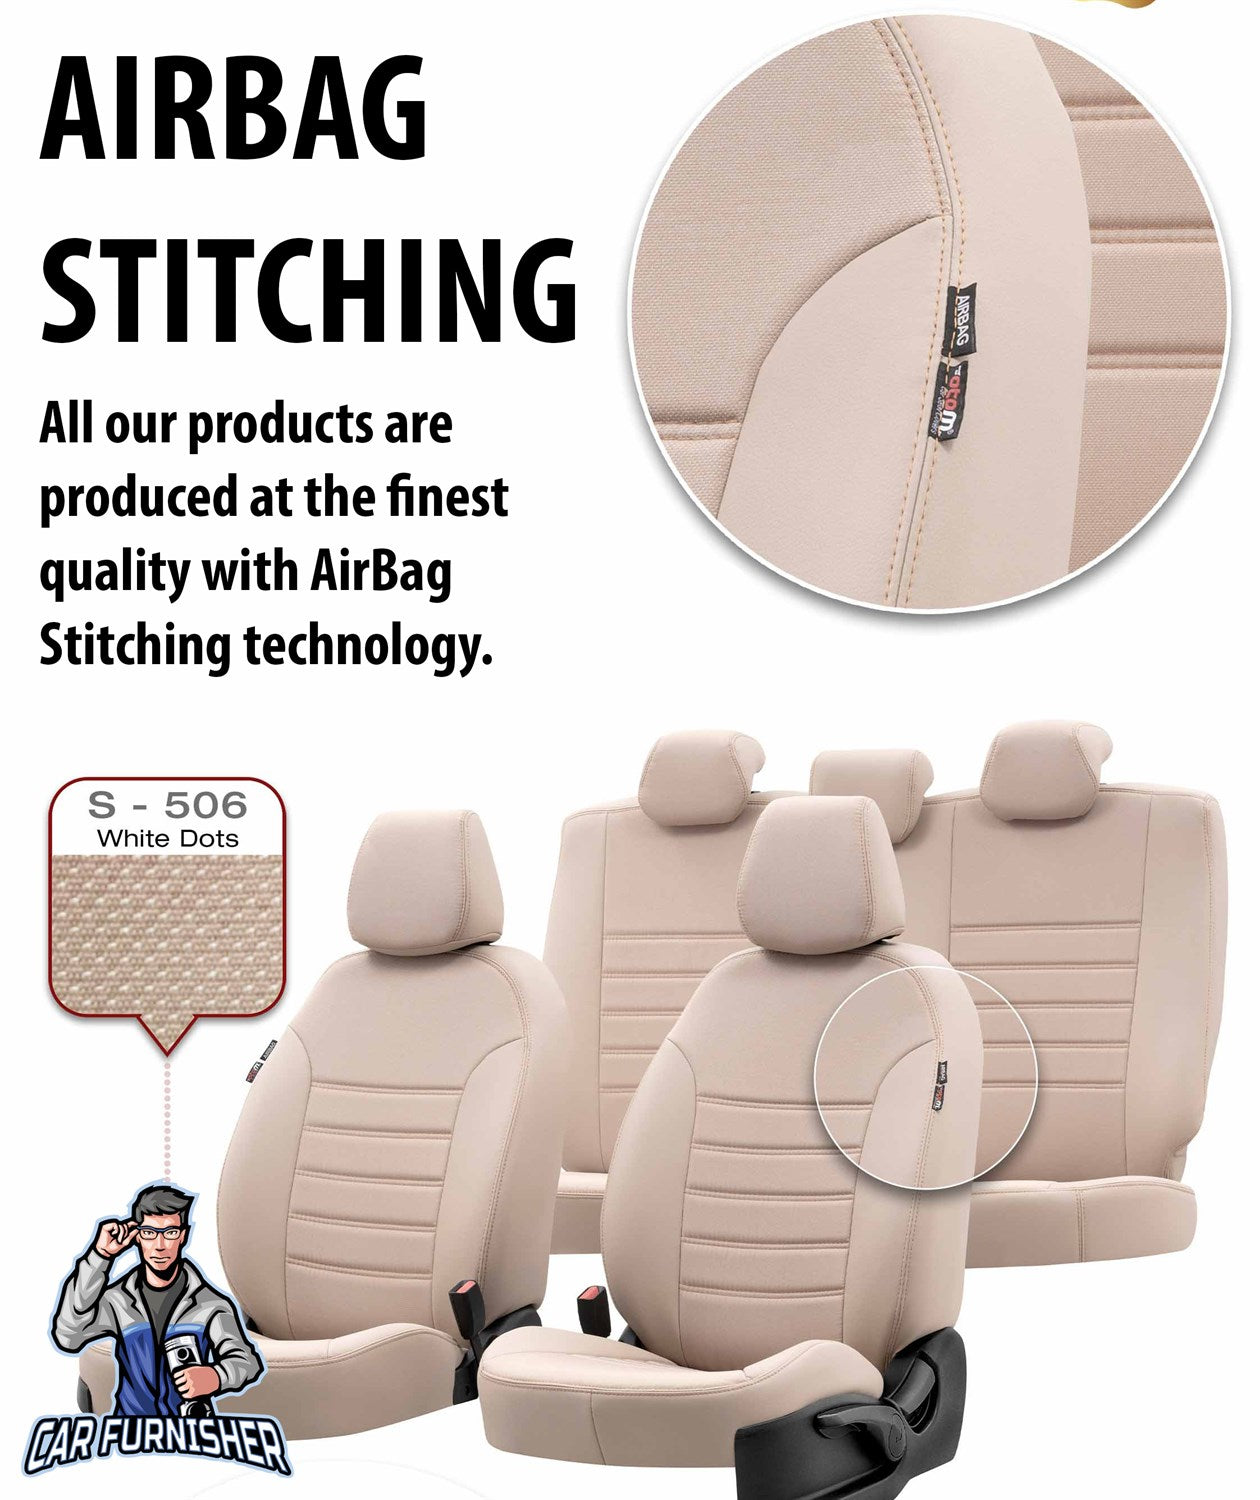 Volkswagen Bora Seat Cover Paris Leather & Jacquard Design Beige Leather & Jacquard Fabric